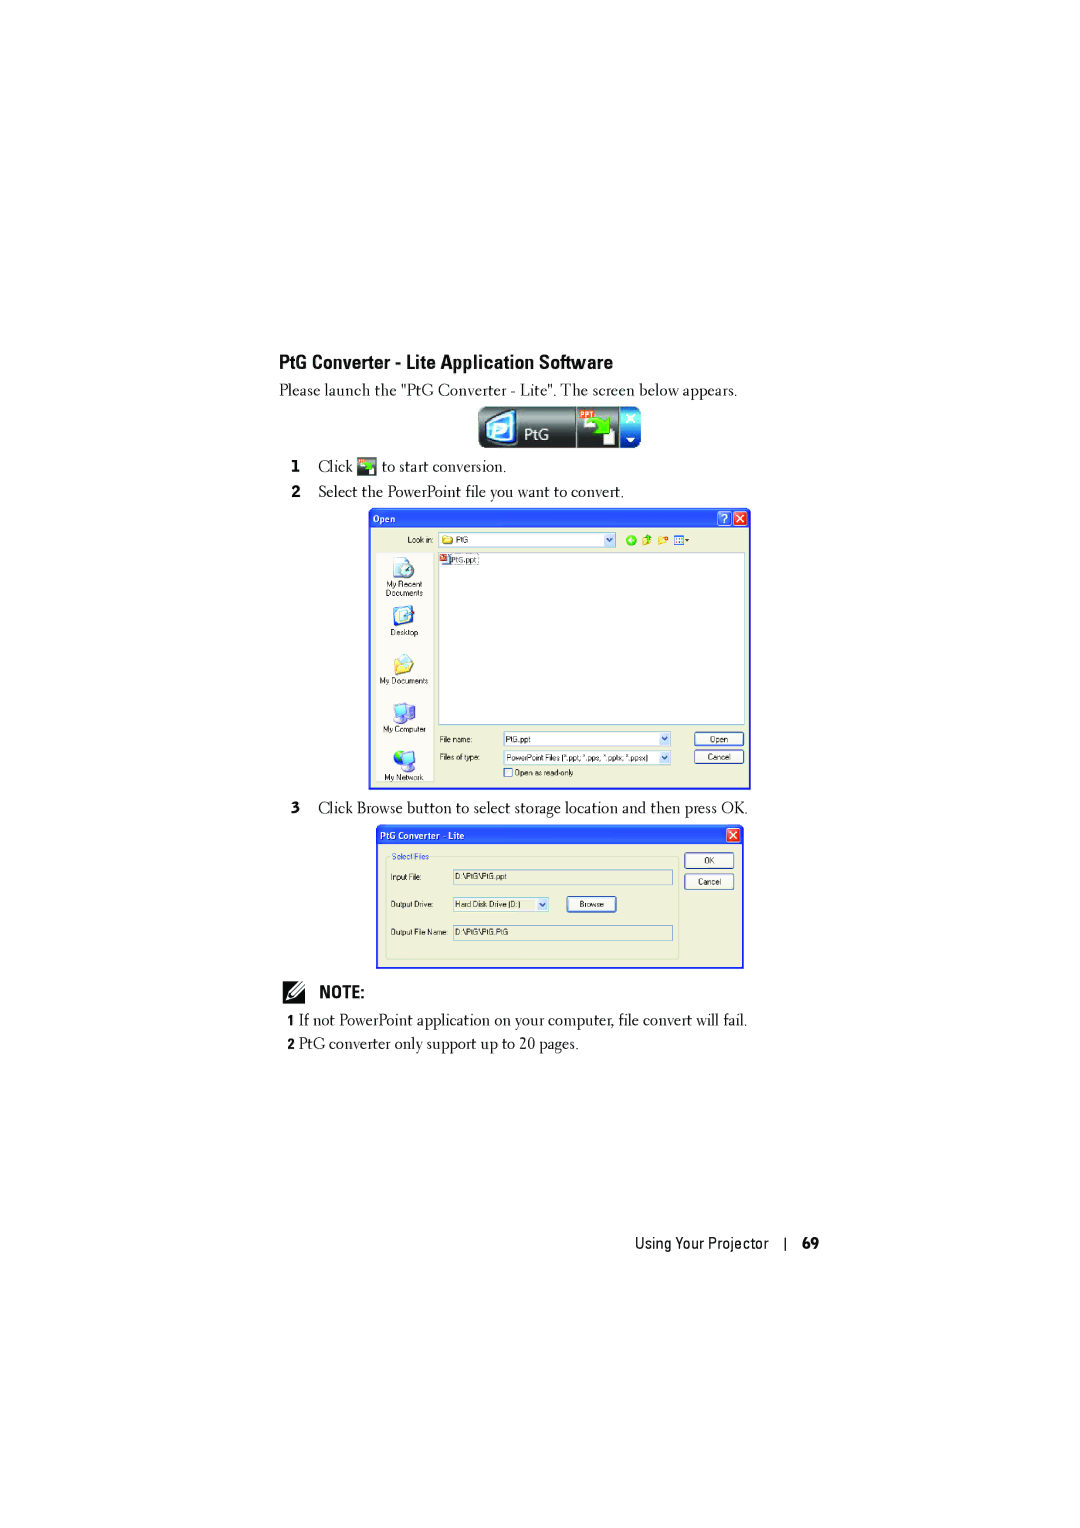 Dell dell projector manual PtG Converter Lite Application Software 